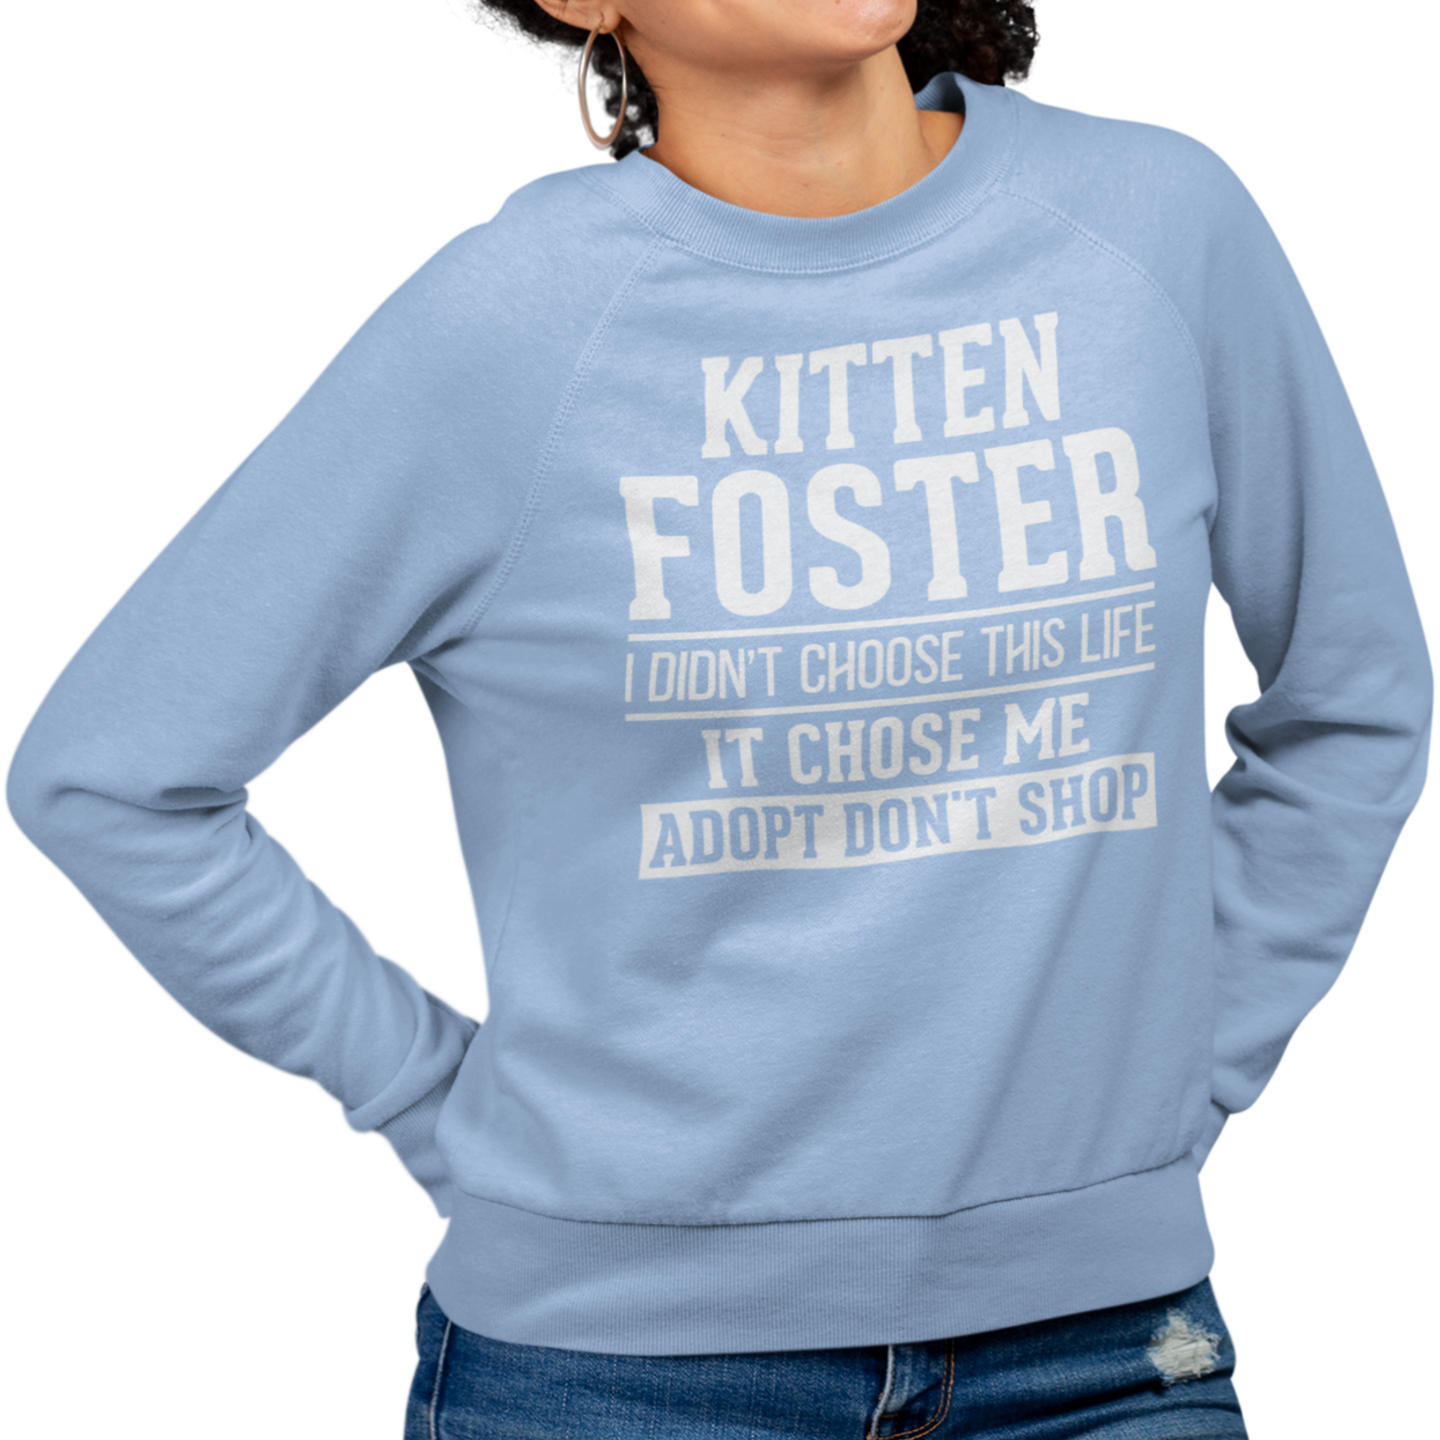 KITTEN FOSTER - Foster Mom Things